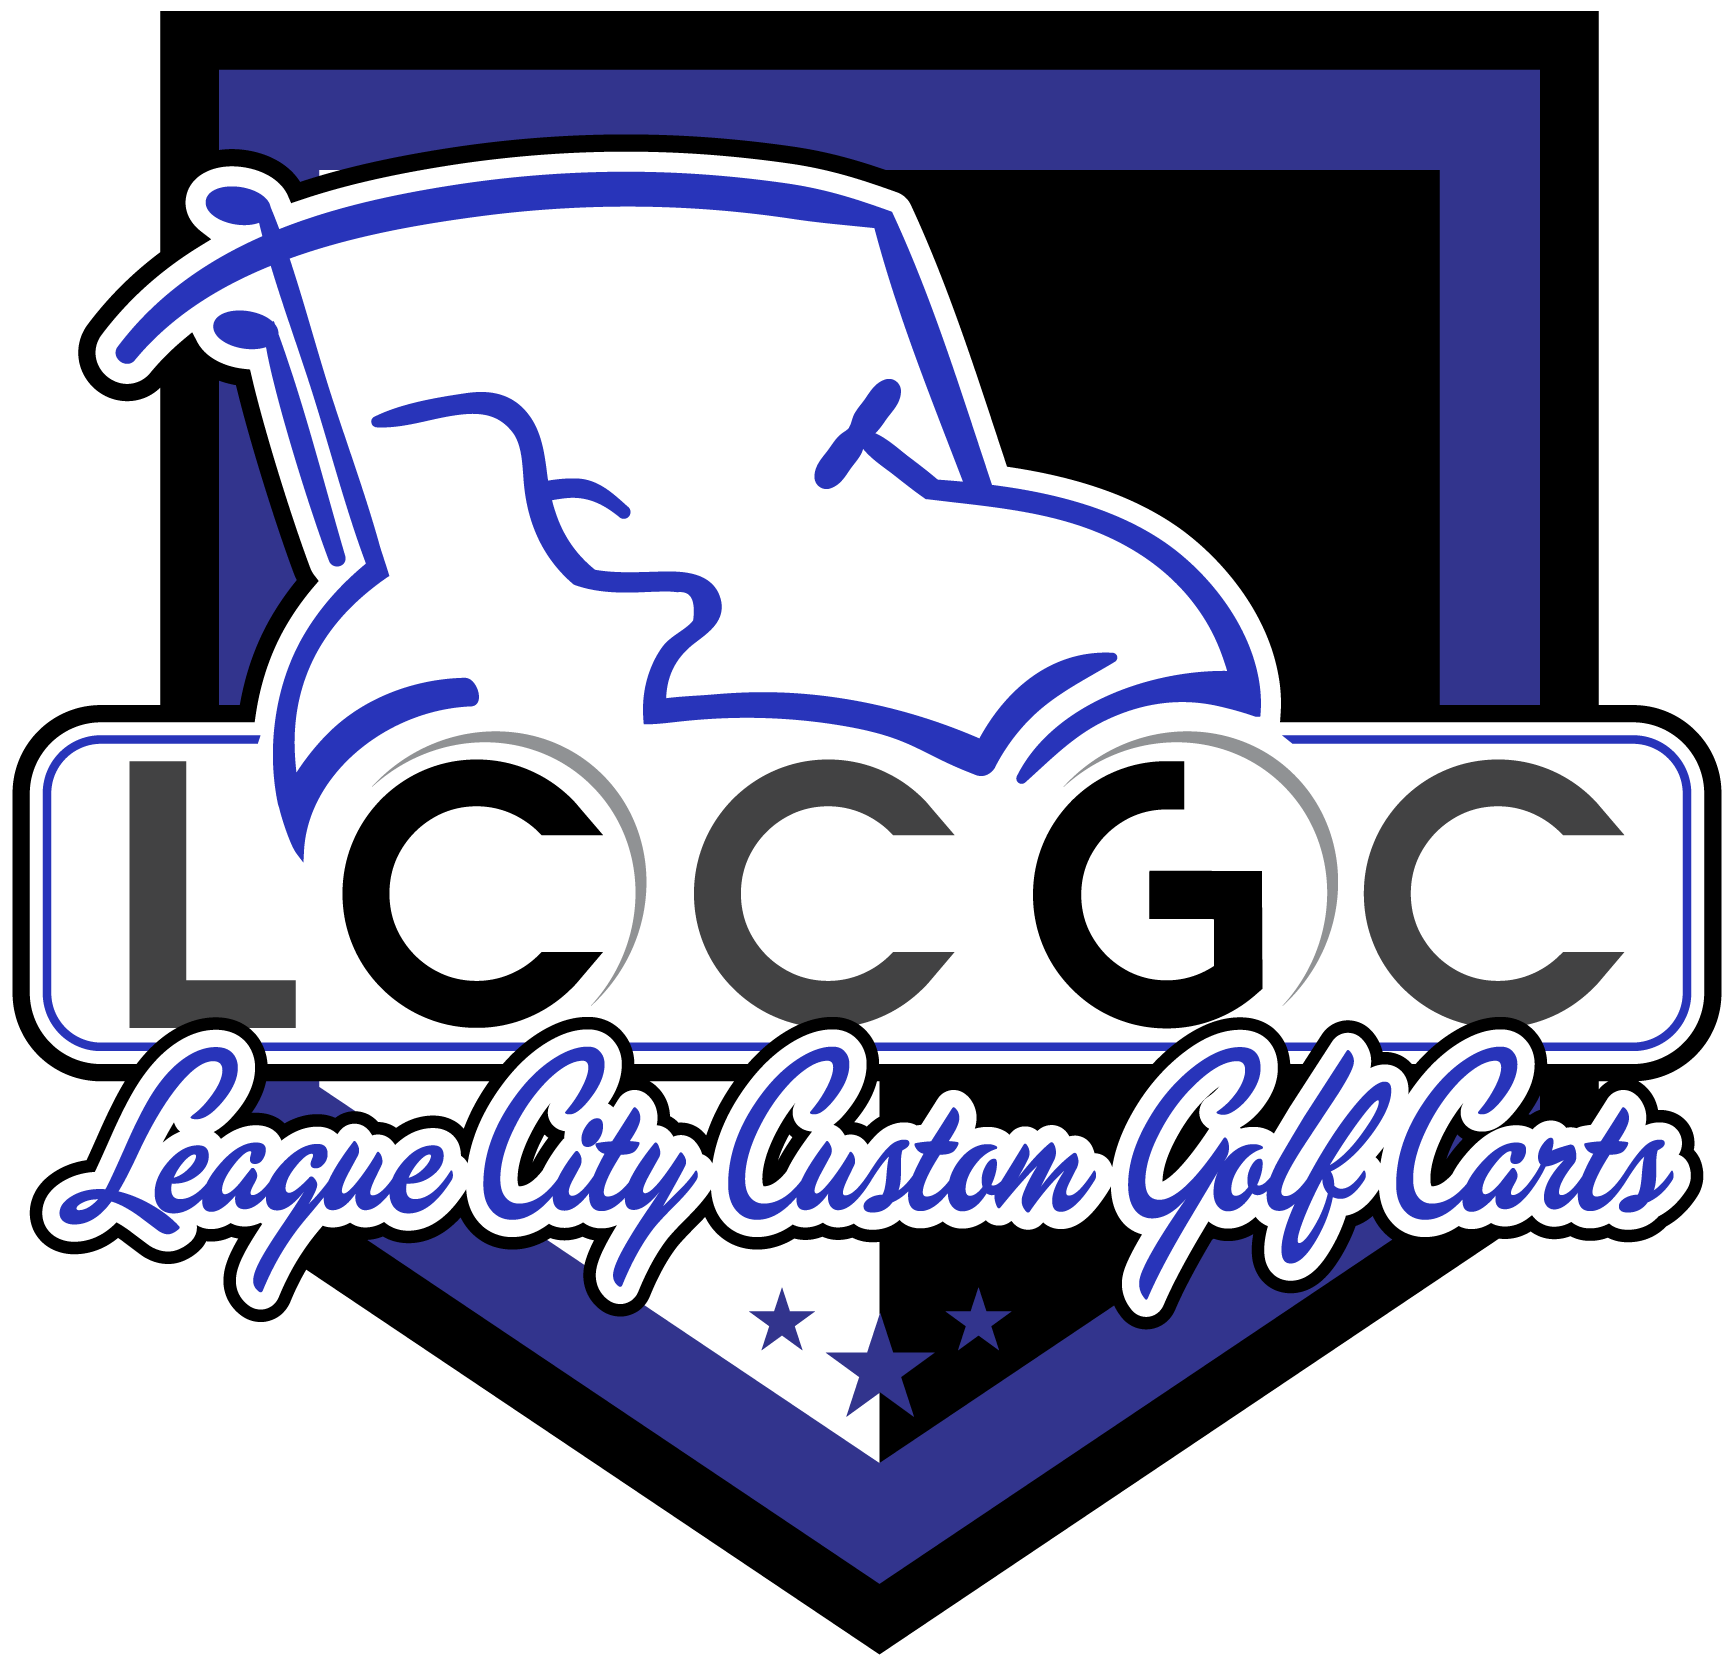 league city custom golf carts logo